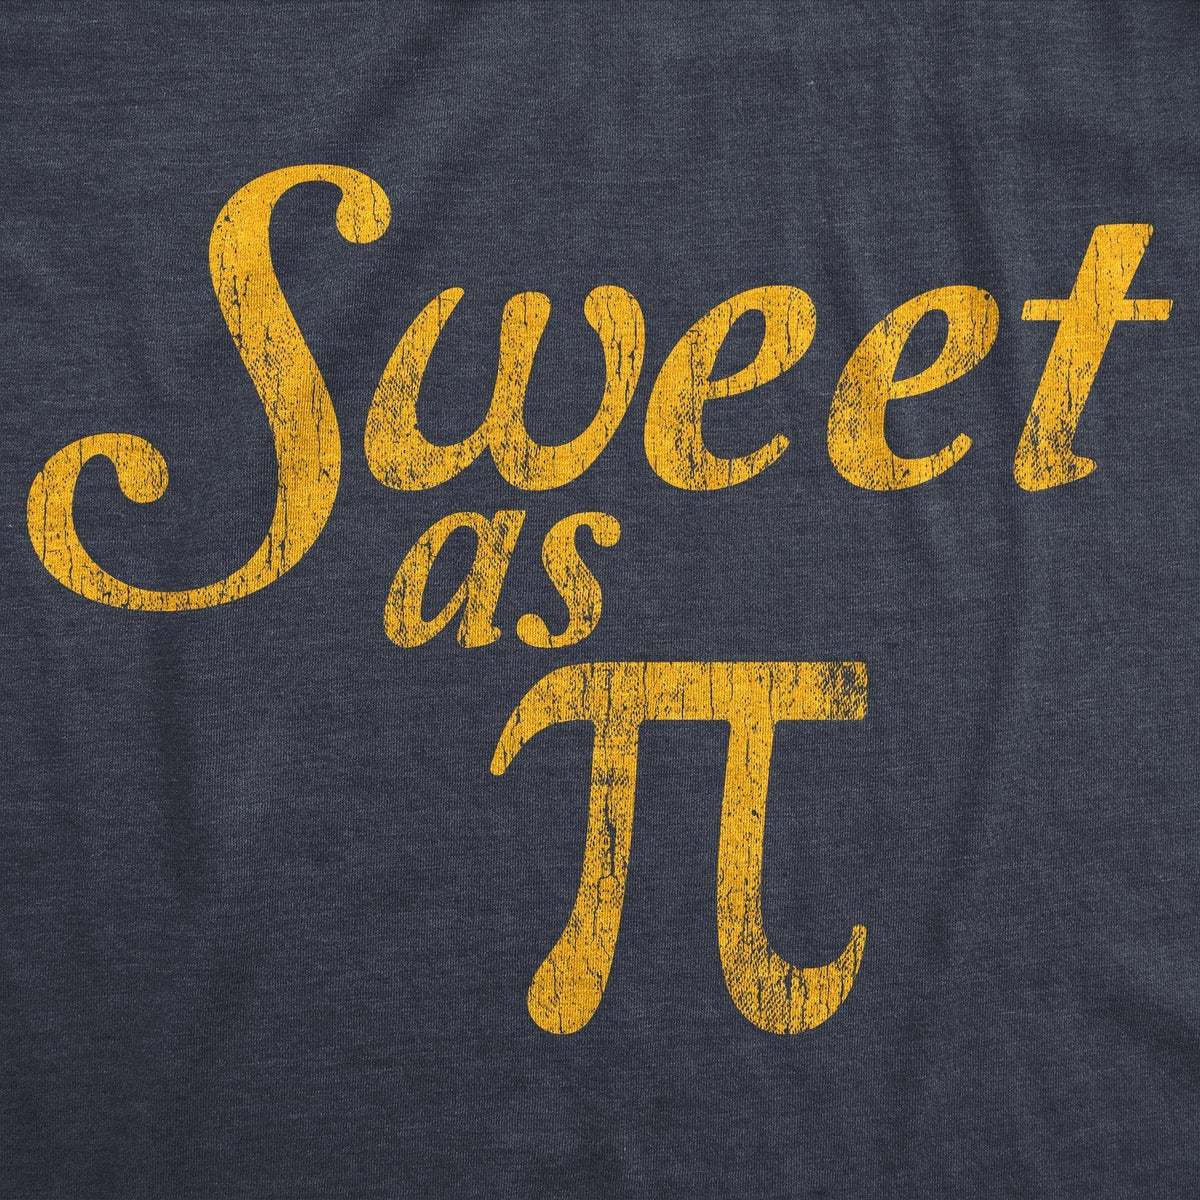 Sweet As Pi Men&#39;s Tshirt - Crazy Dog T-Shirts